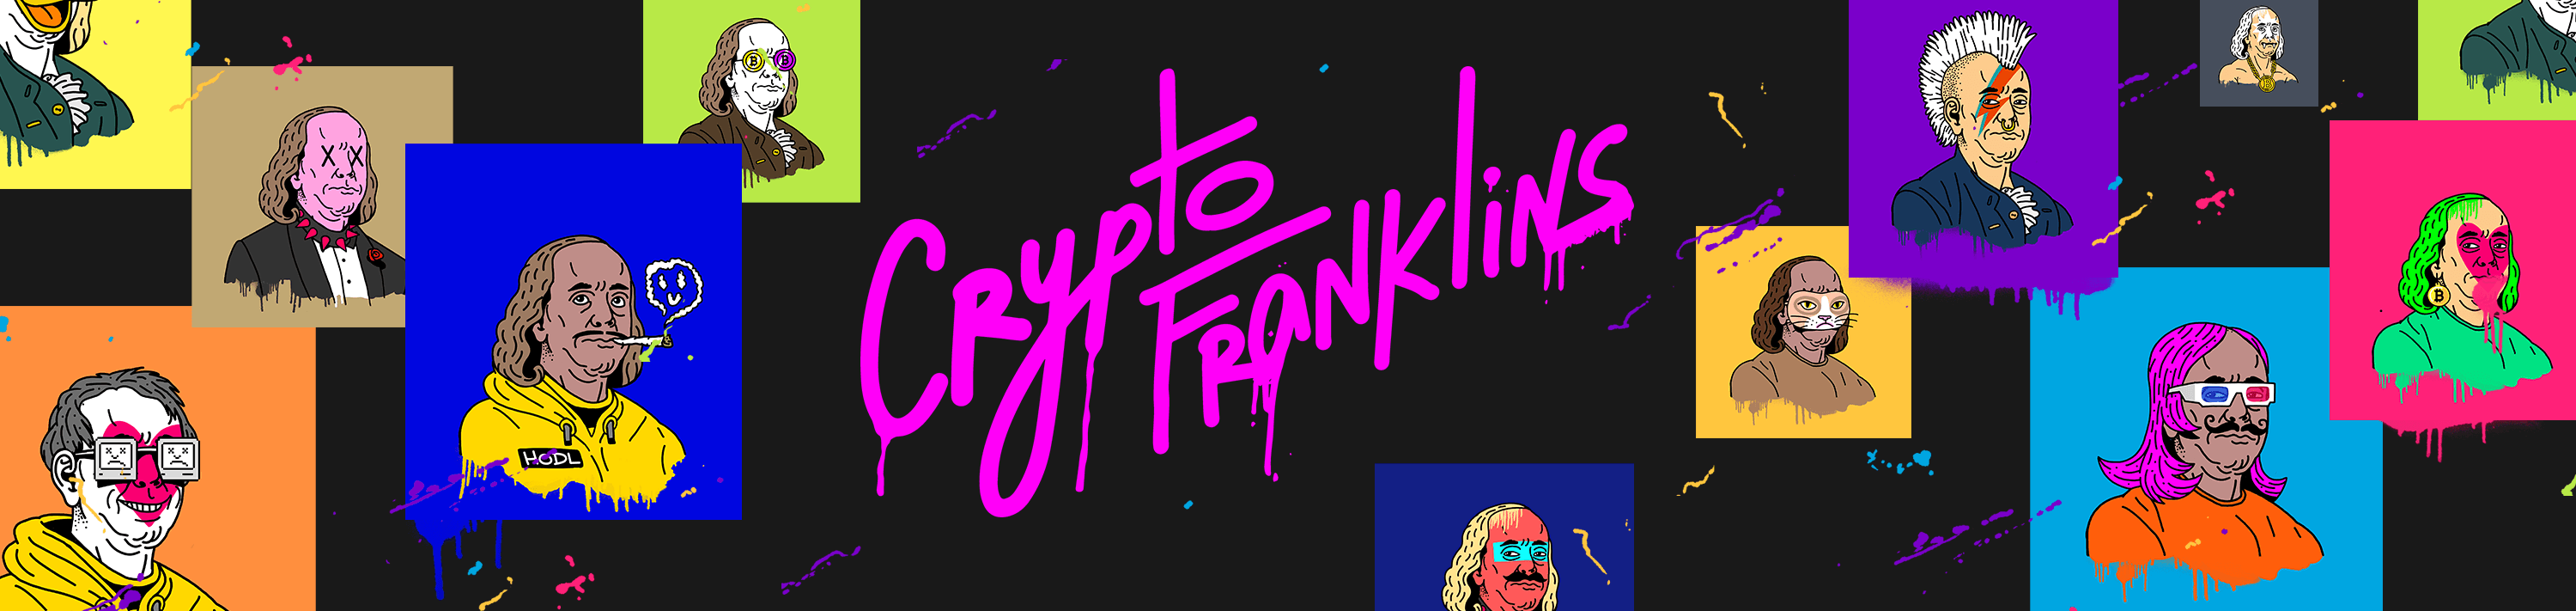 CryptoFranklins